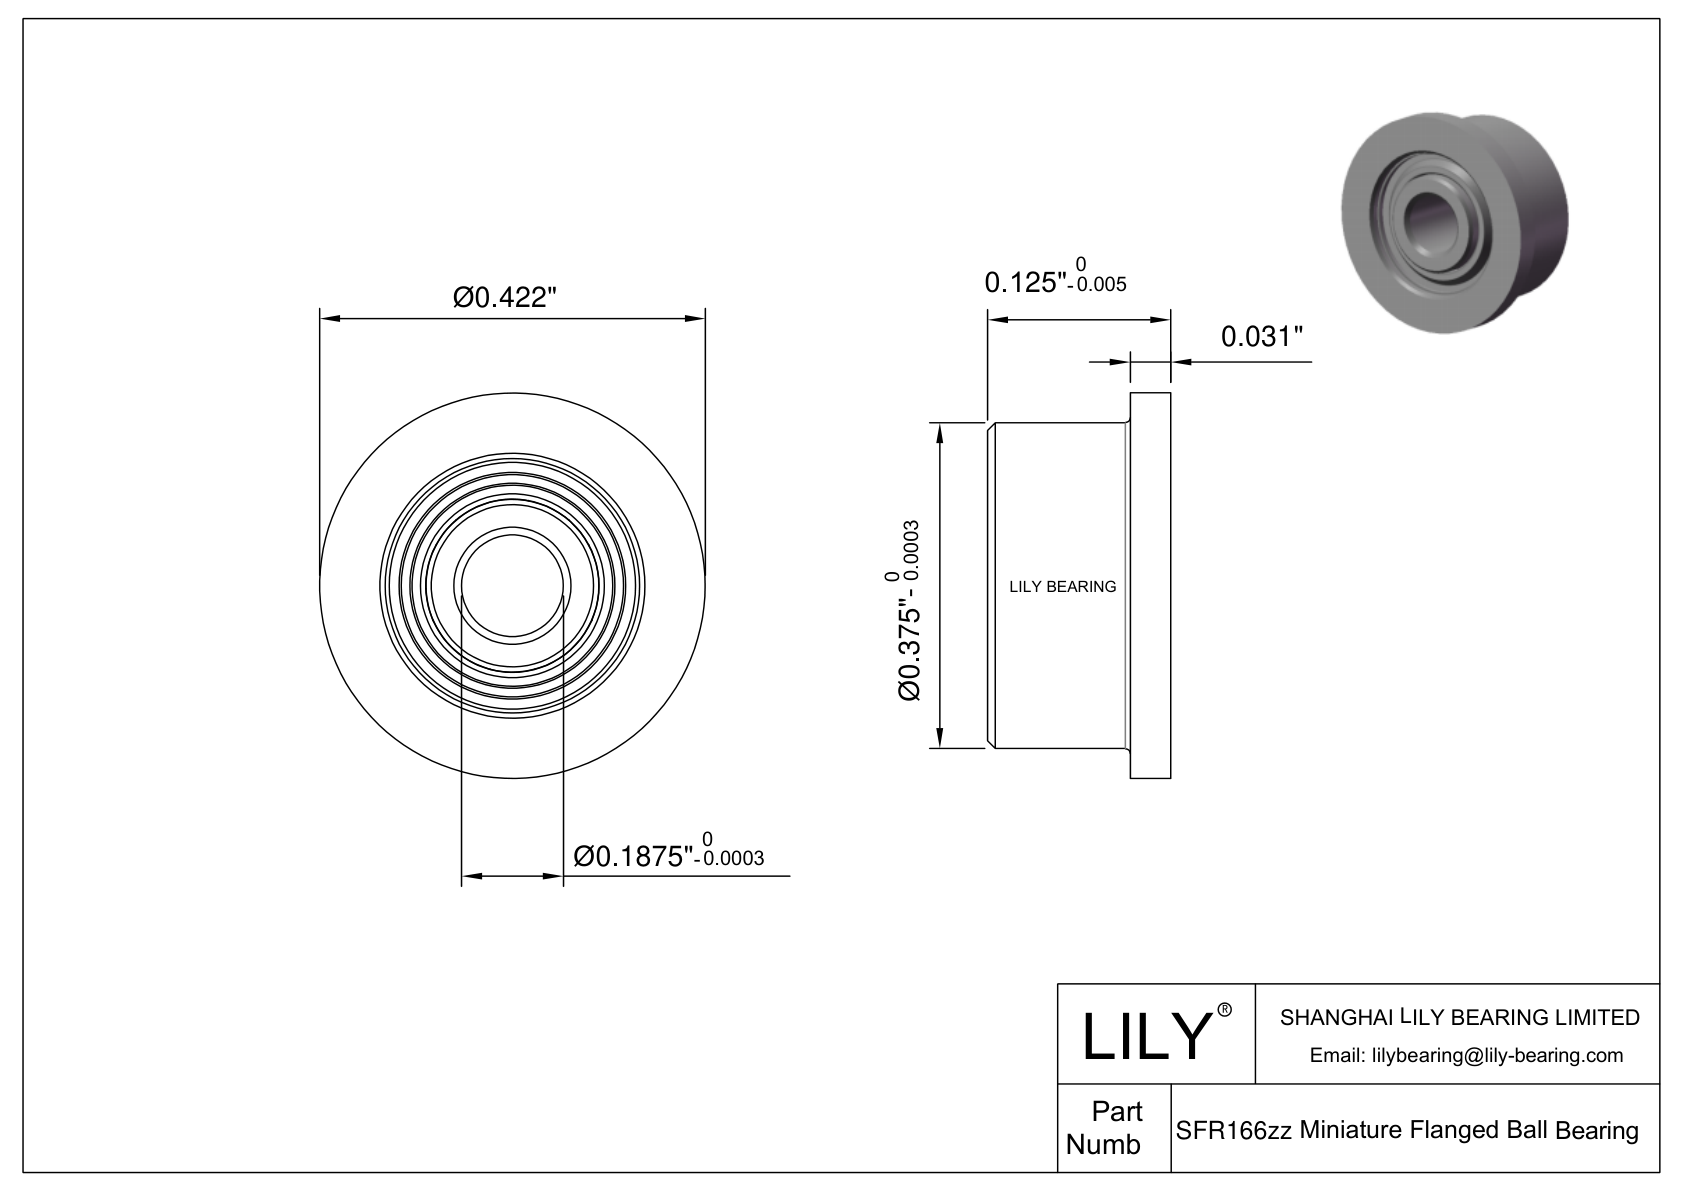 SFR166C-UU #3 L55 Hybrid Ceramic Flanged Bearings cad drawing